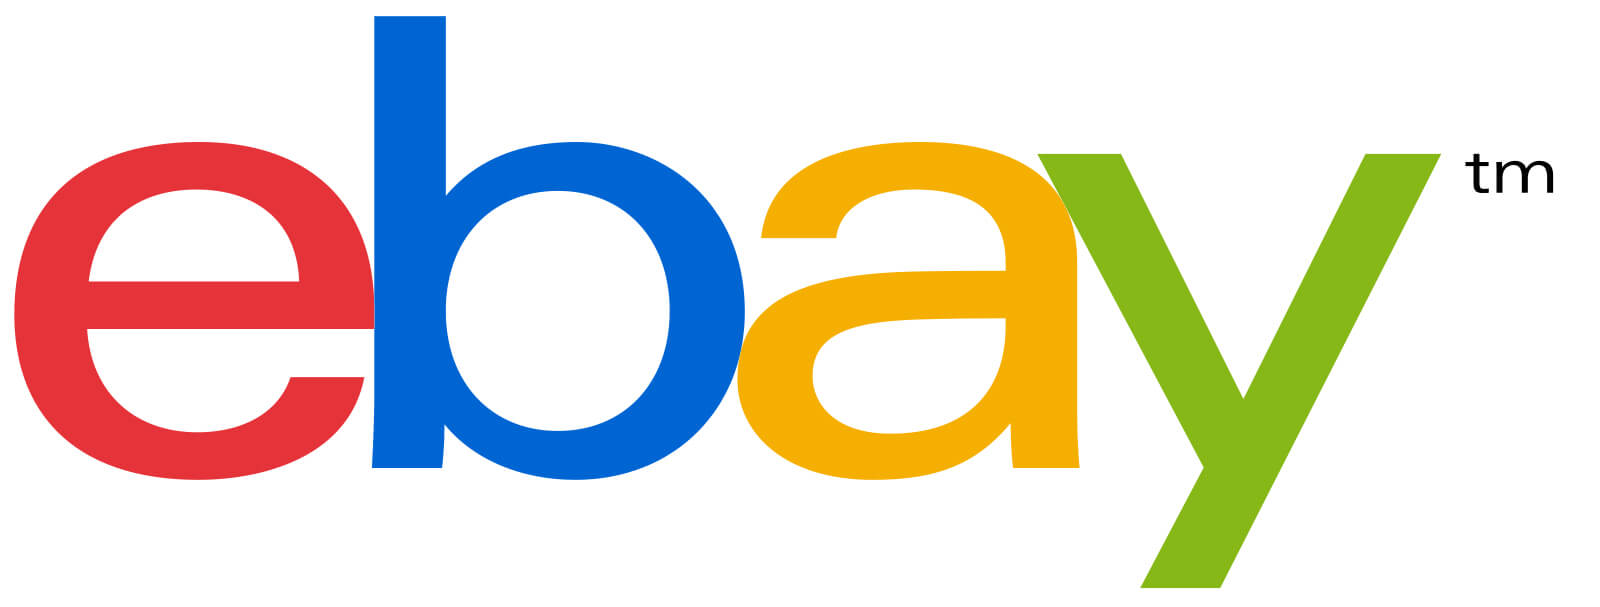 eBay入驻费用具体是多少?有什么要求?